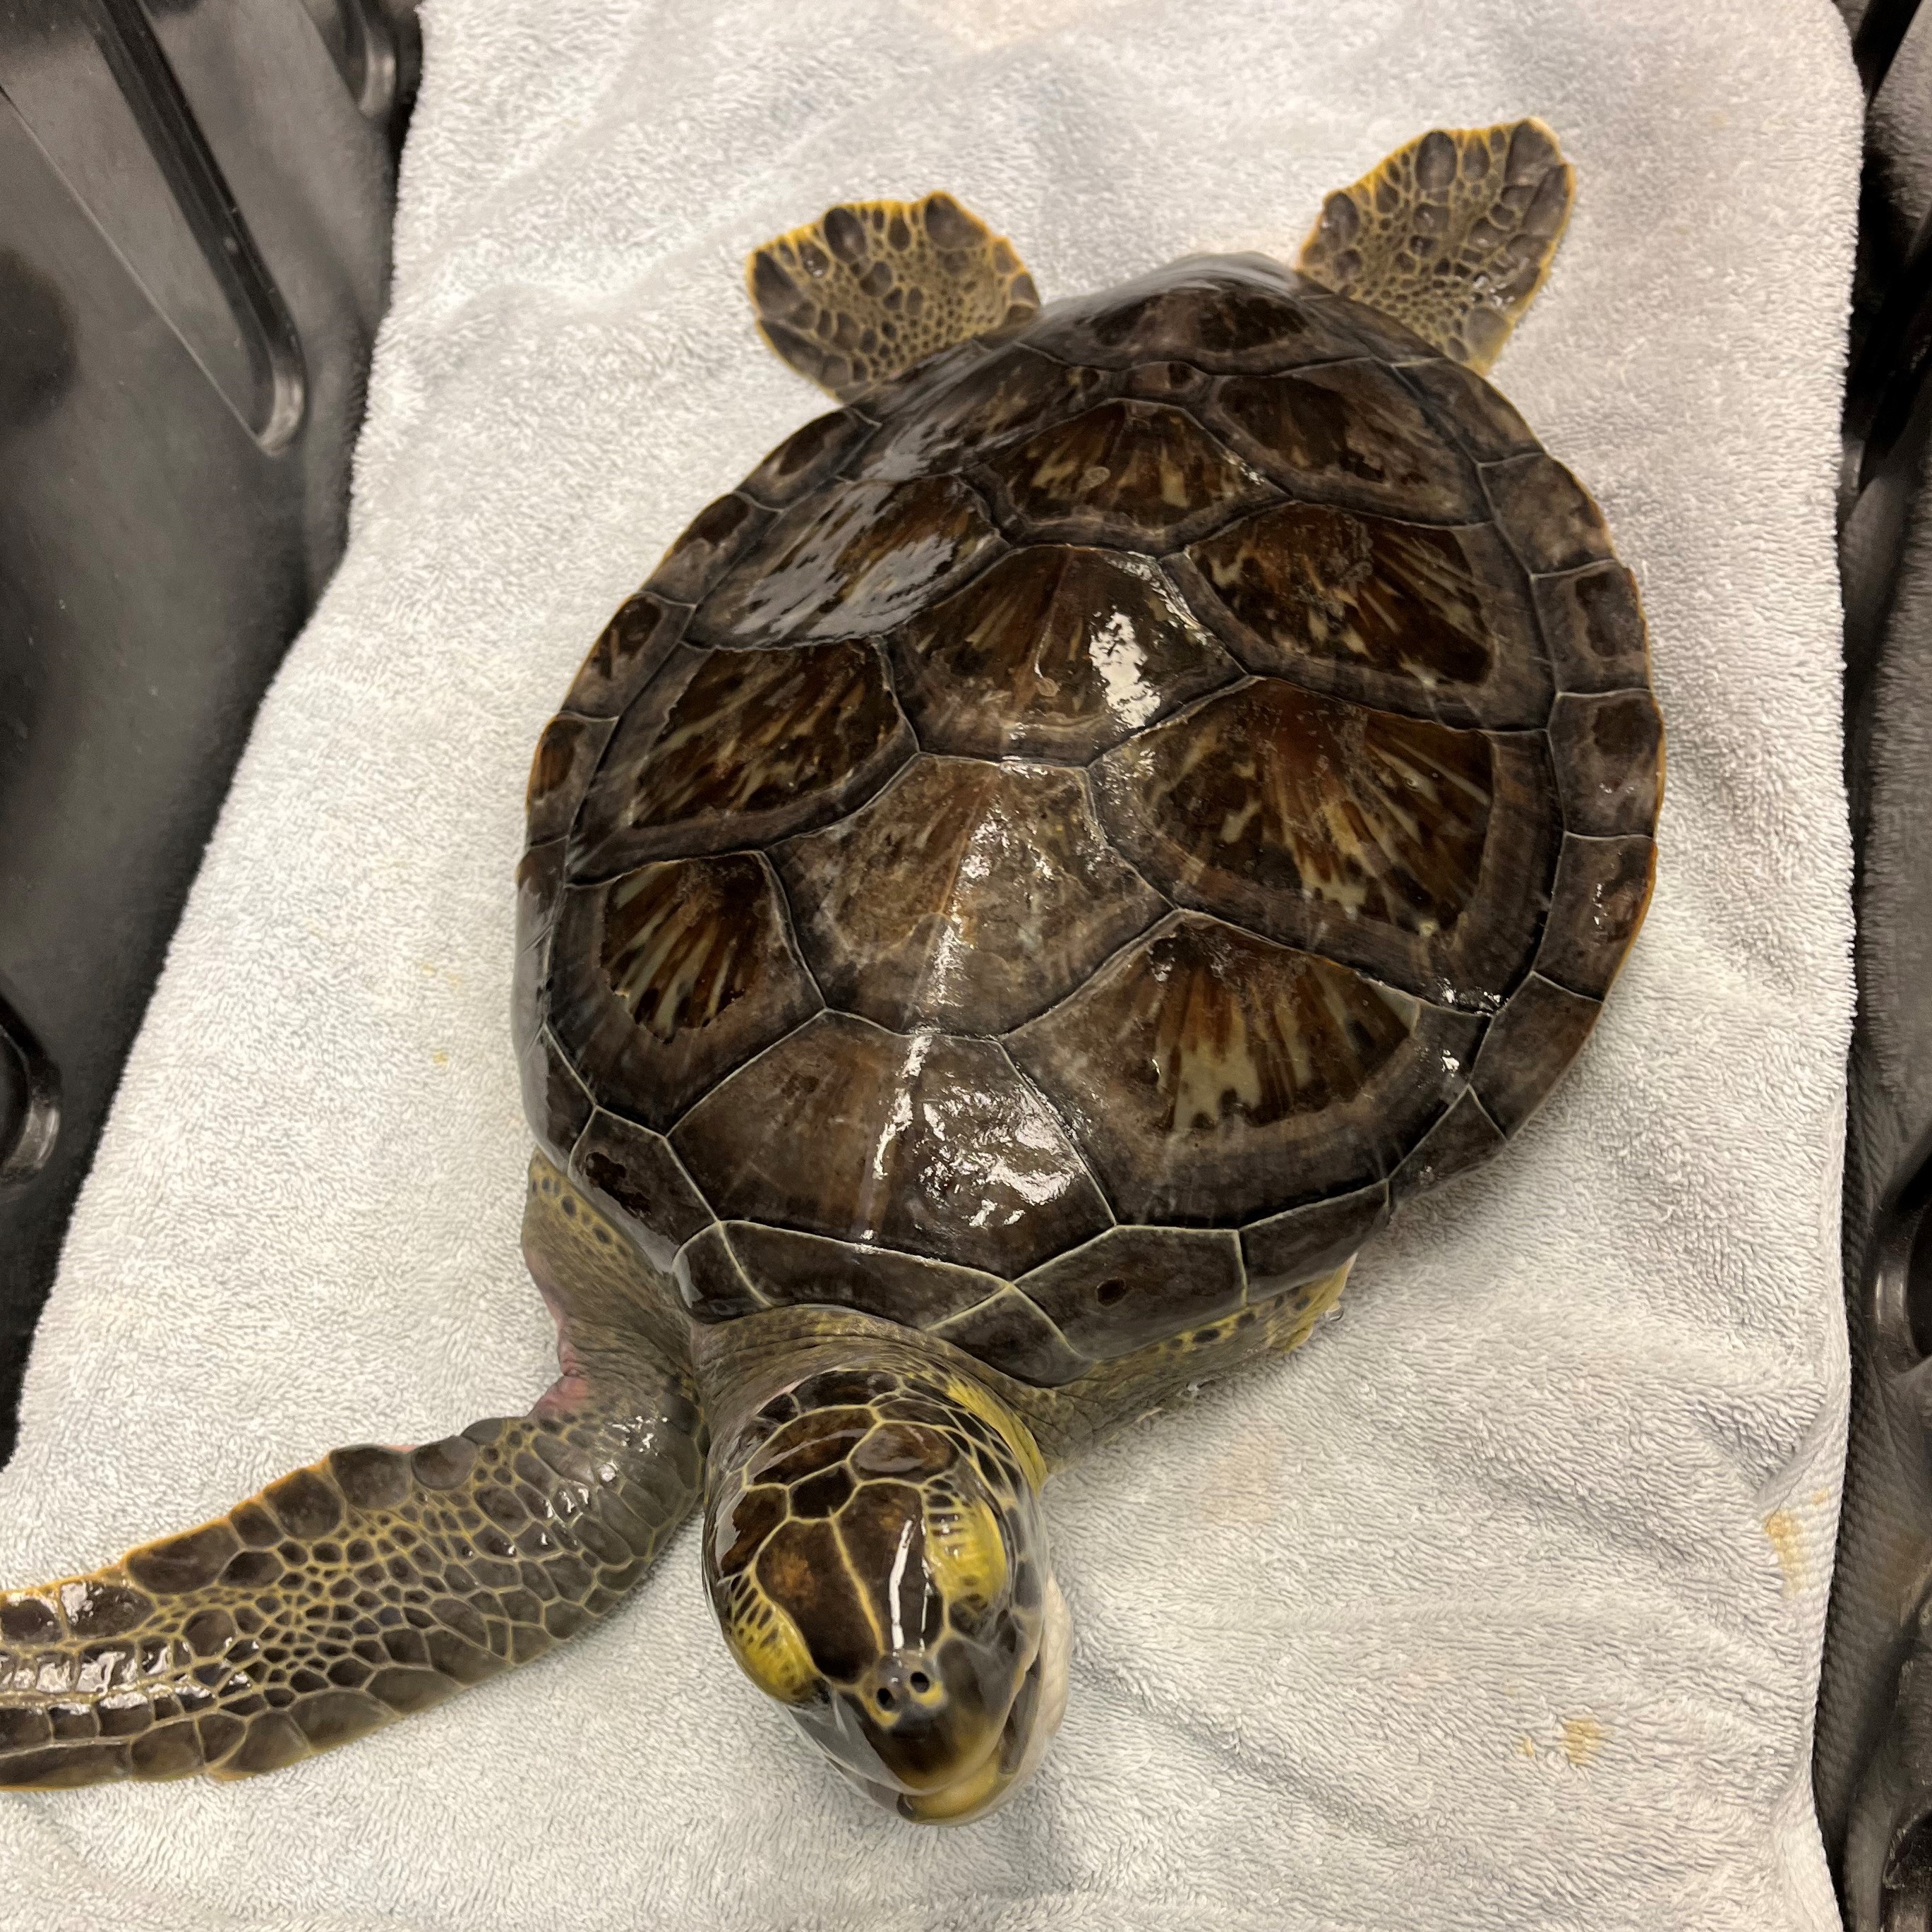 Sea Turtle Pesto prior to release